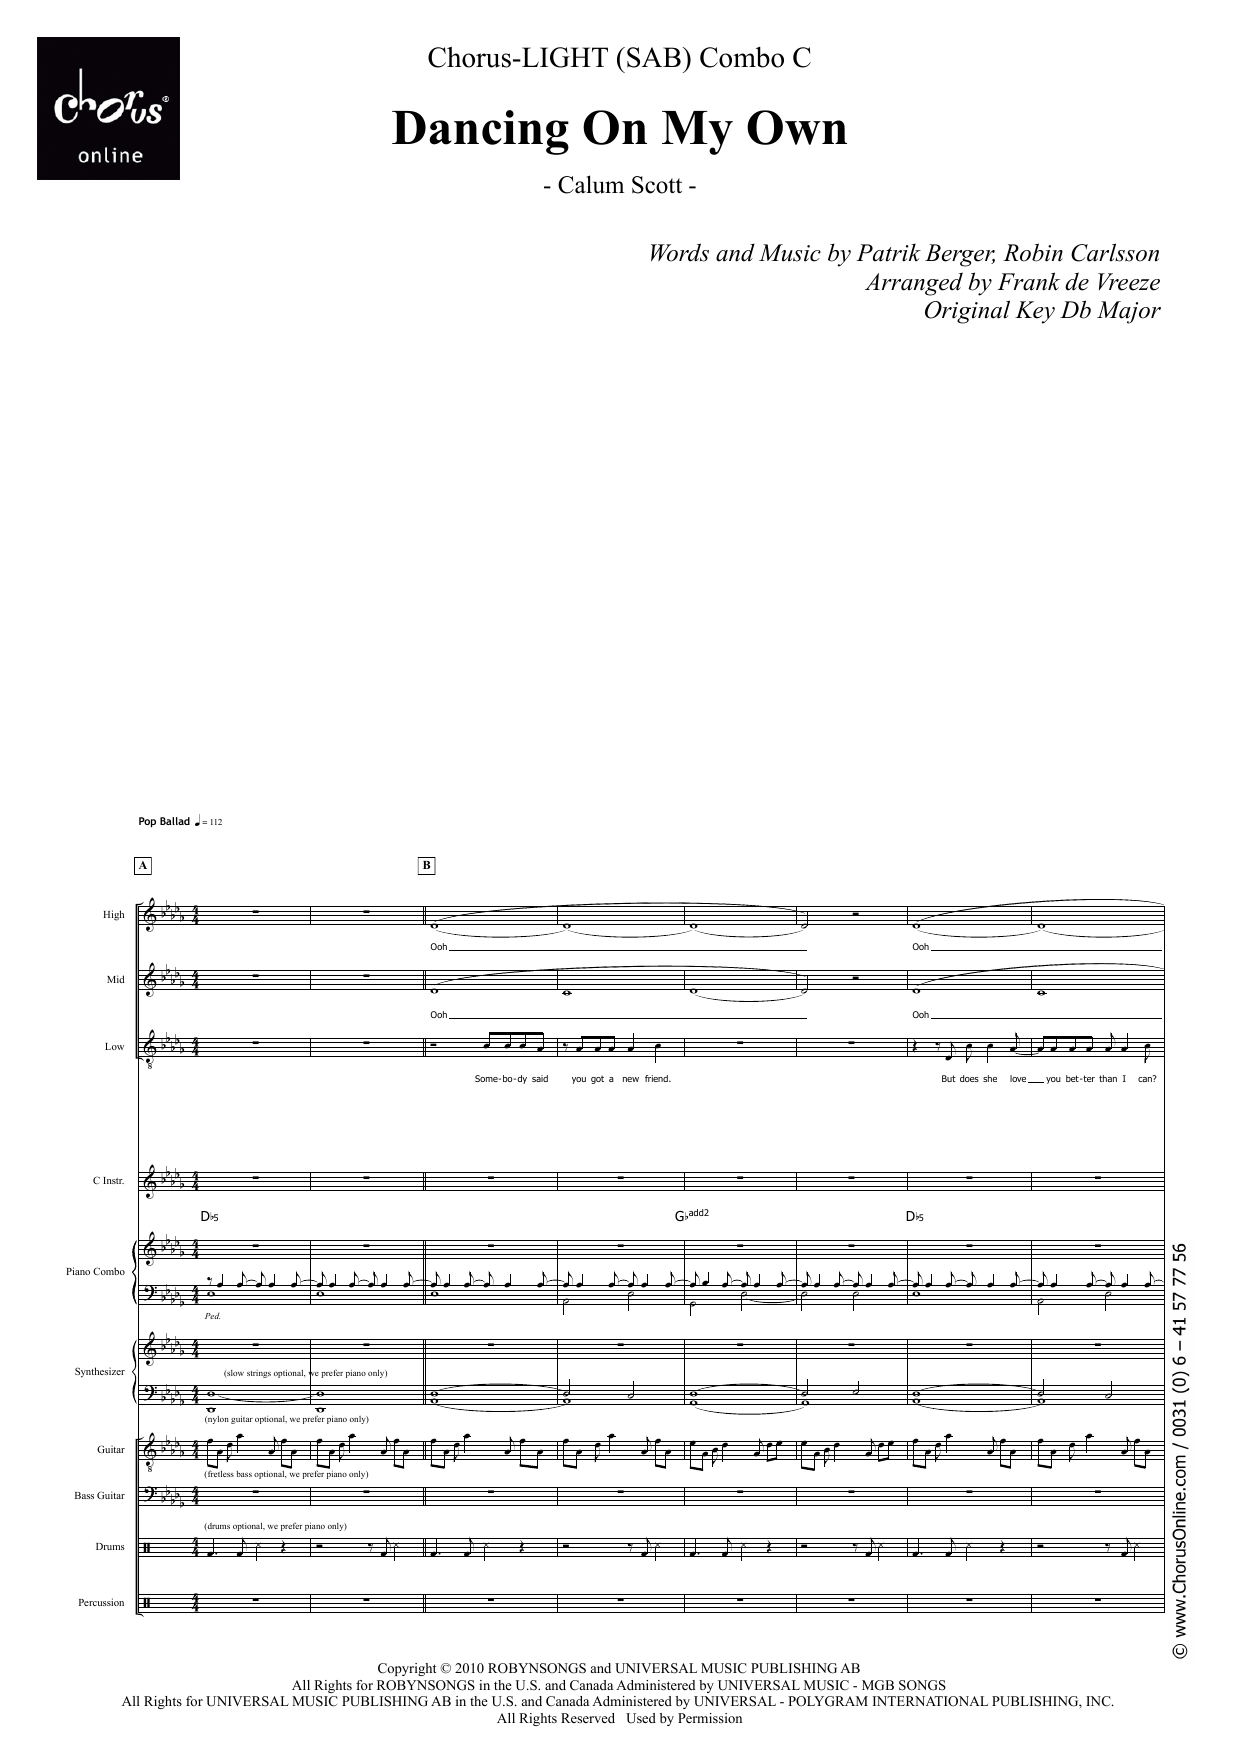 Calum Scott Dancing On My Own (arr. Frank de Vreeze) sheet music notes printable PDF score